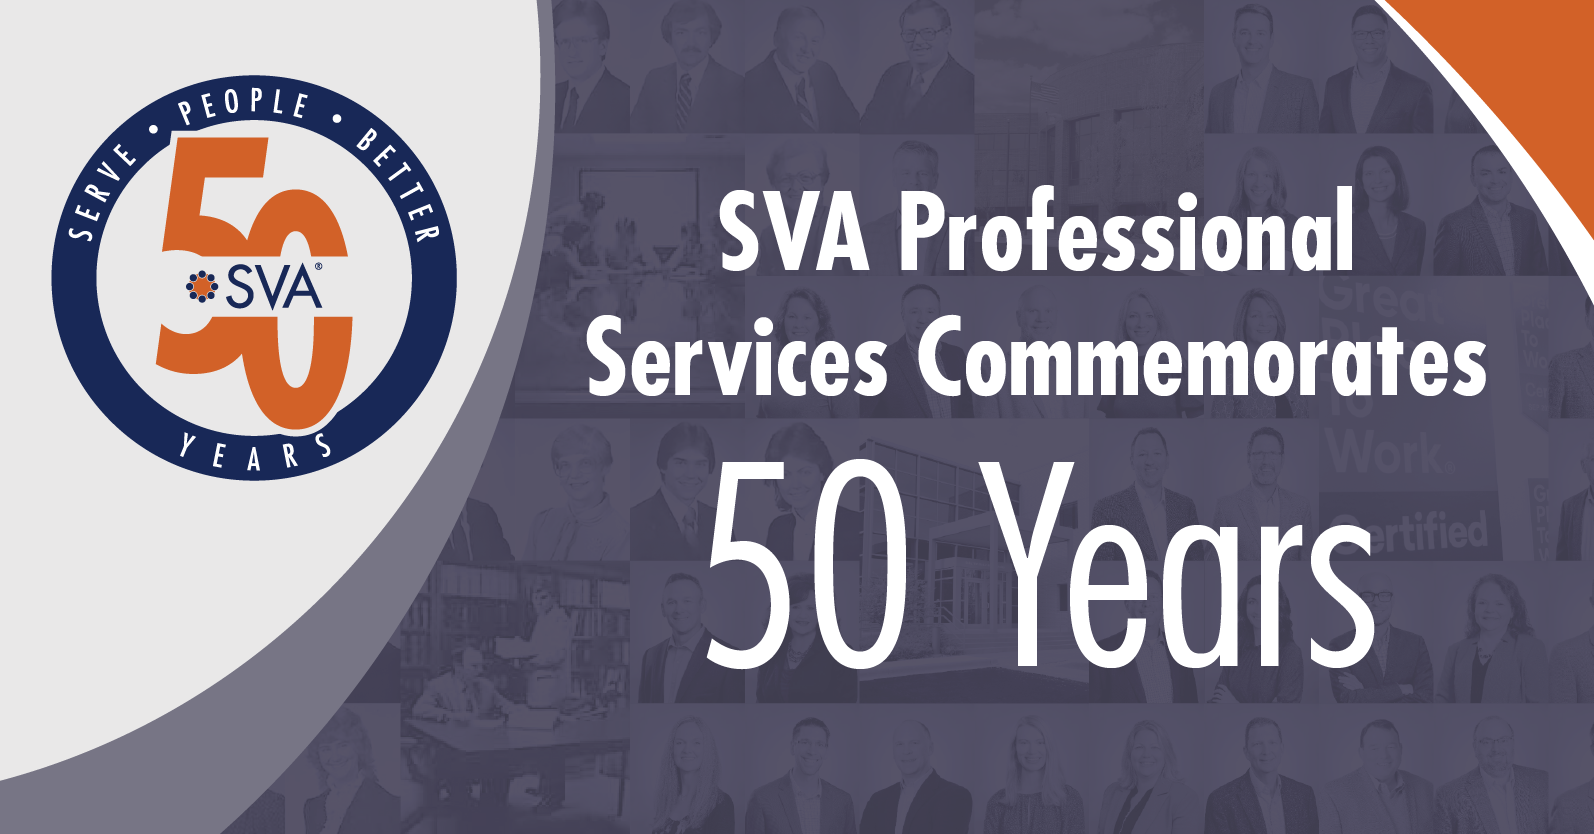 sva-professional-services-commemorates-50-years